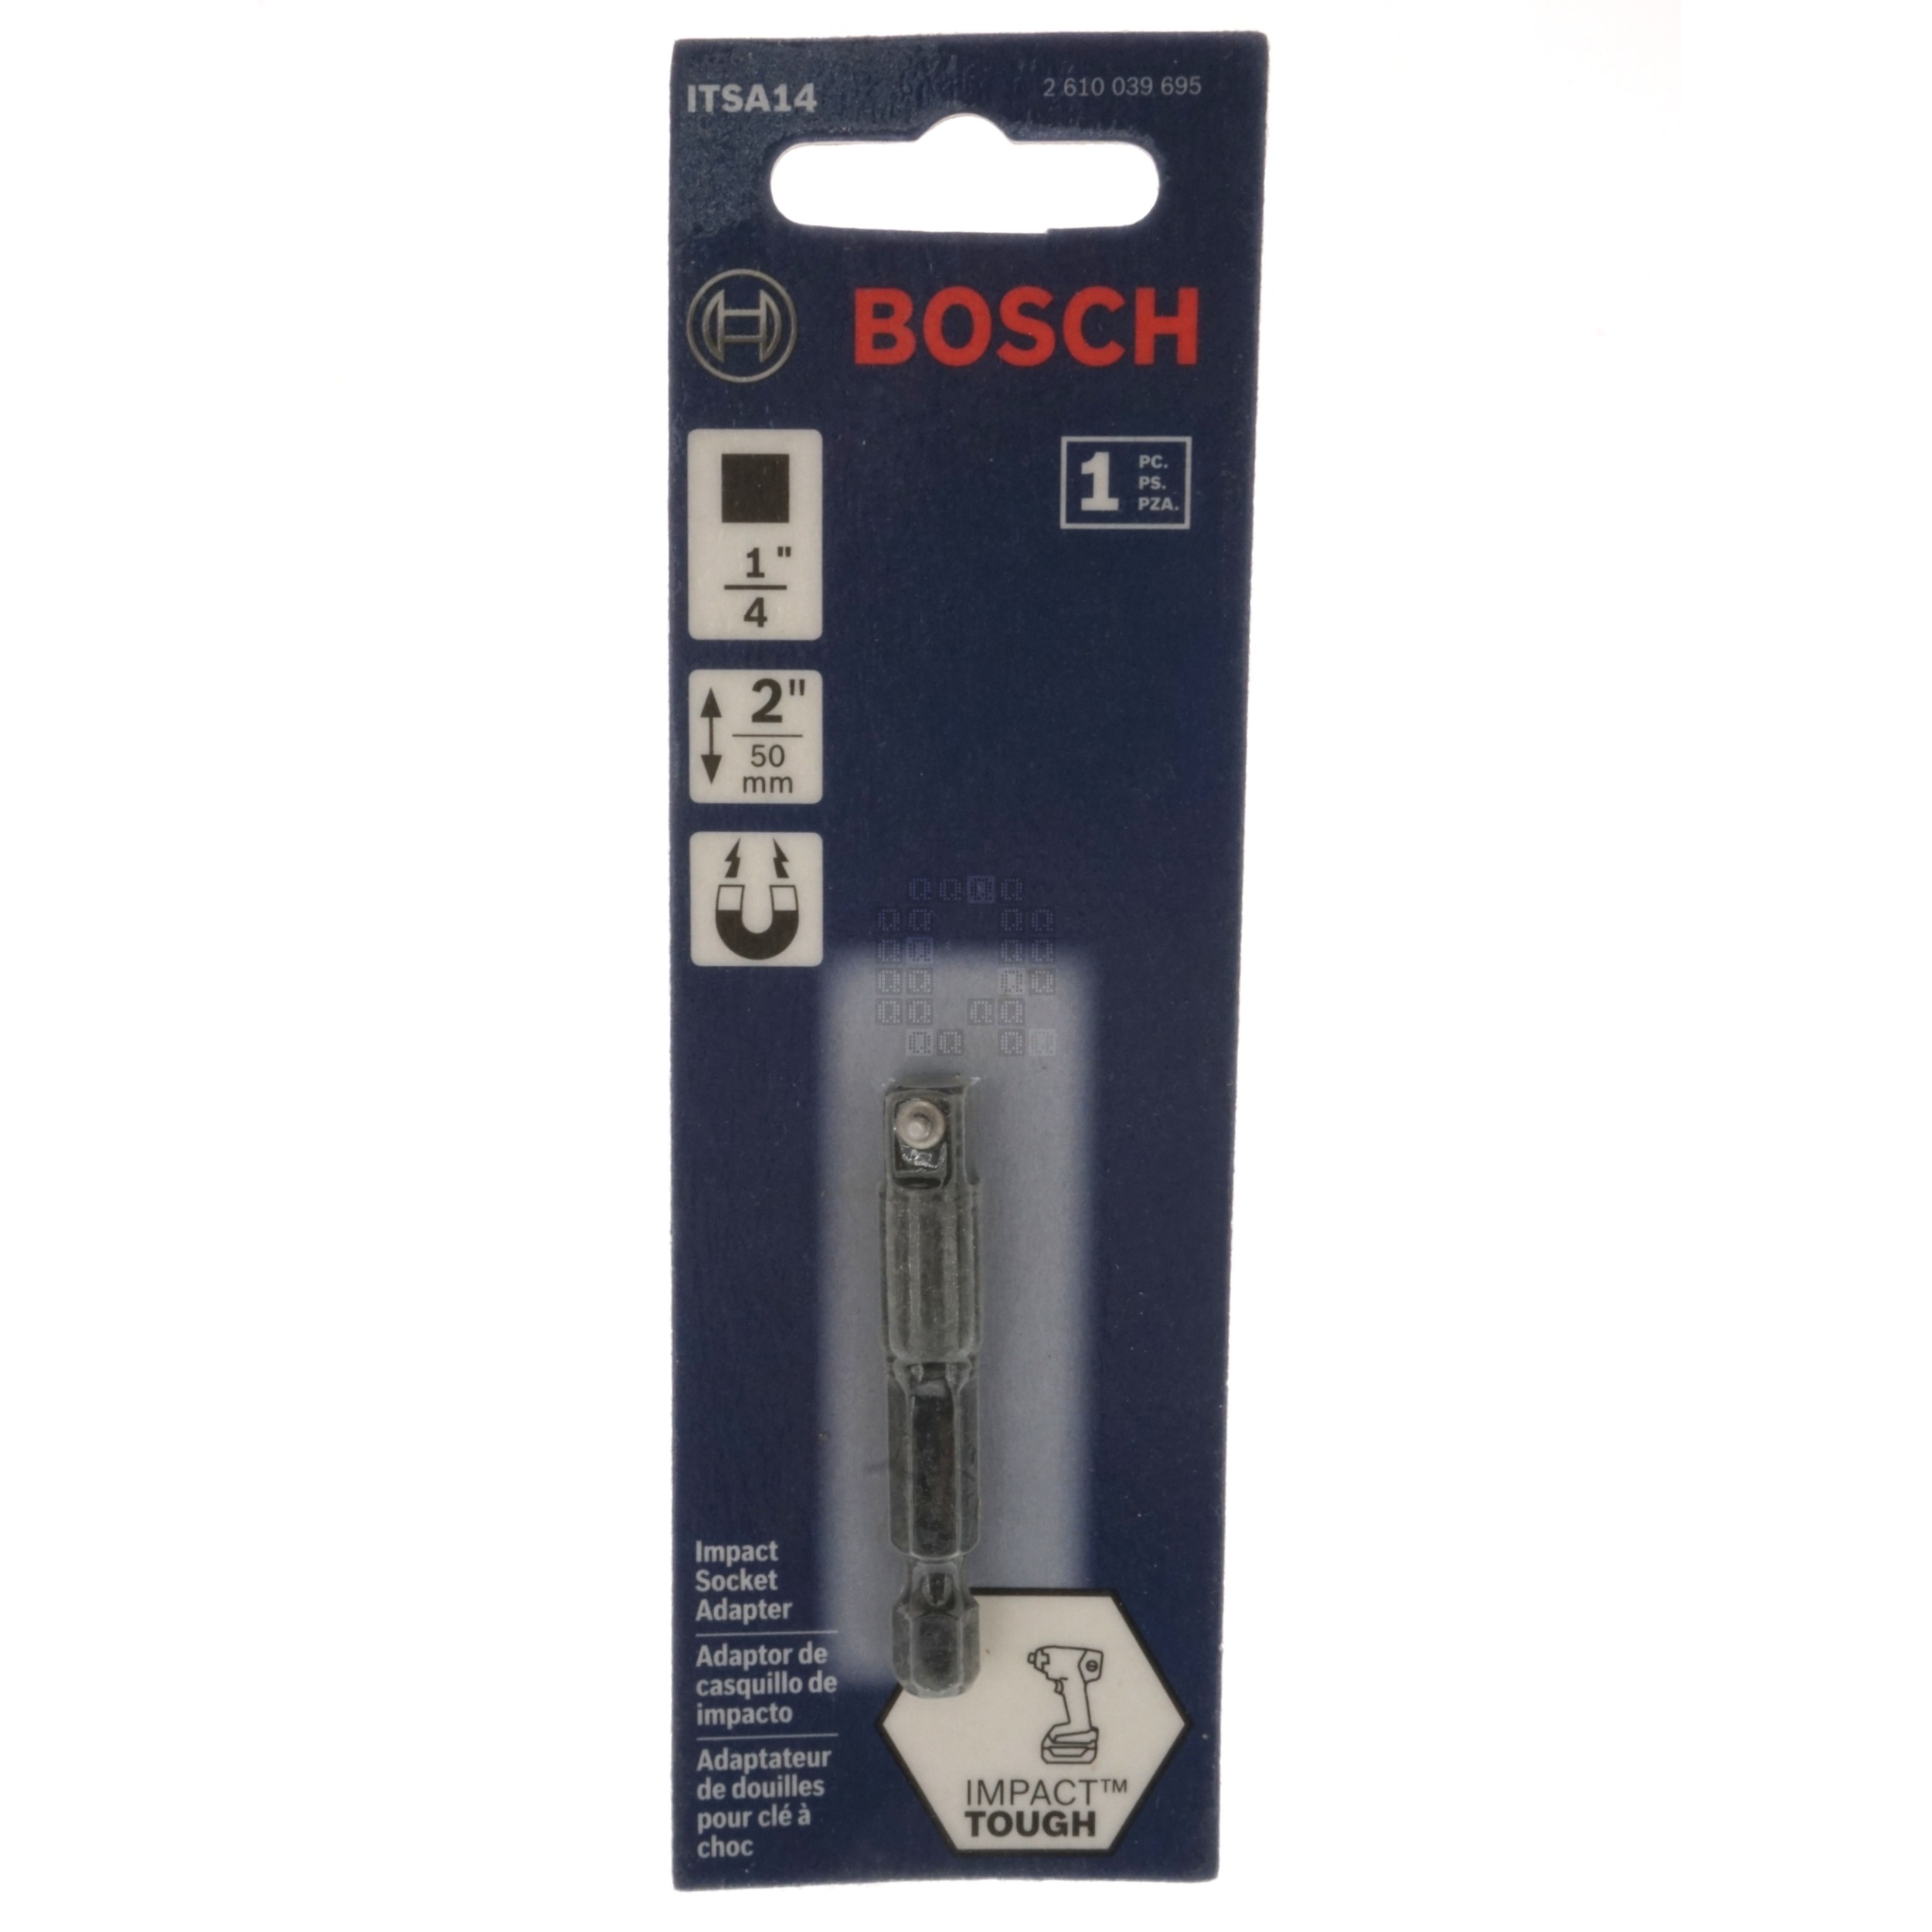 Bosch 2610039695 Impact Tough 1/4" Hex to 1/4" Square Socket Adapter, ITSA14, 2" Length